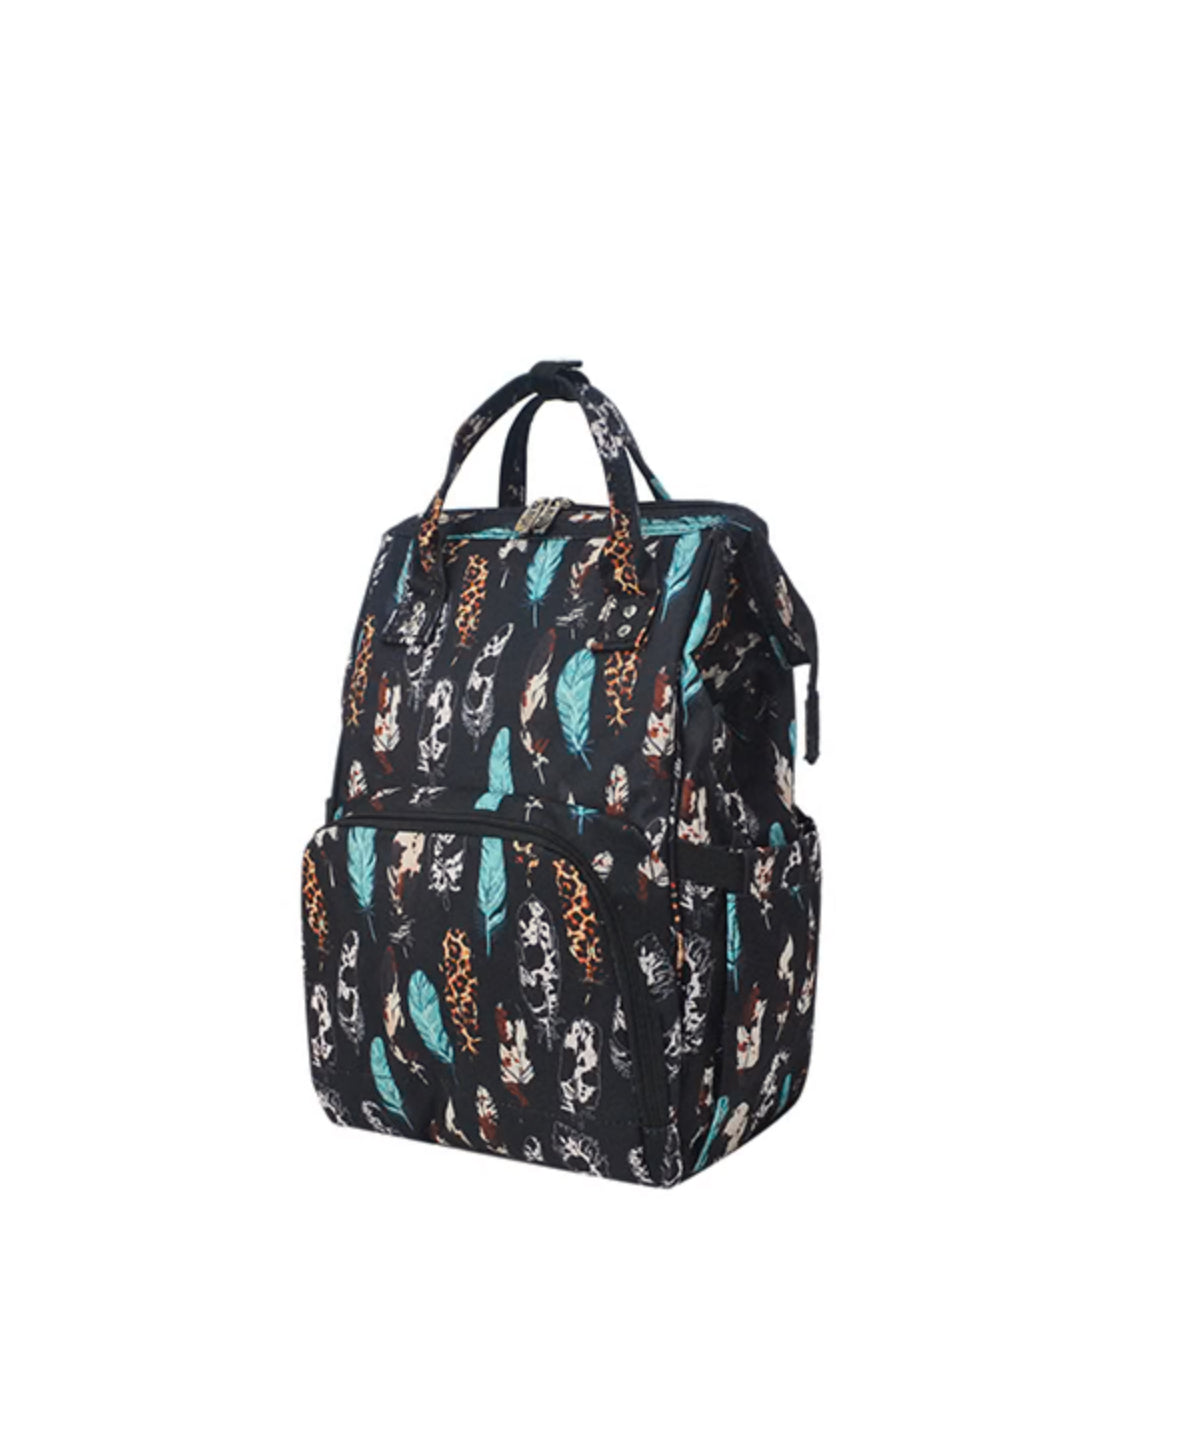 Wild Feather Travel/Diaper Bag